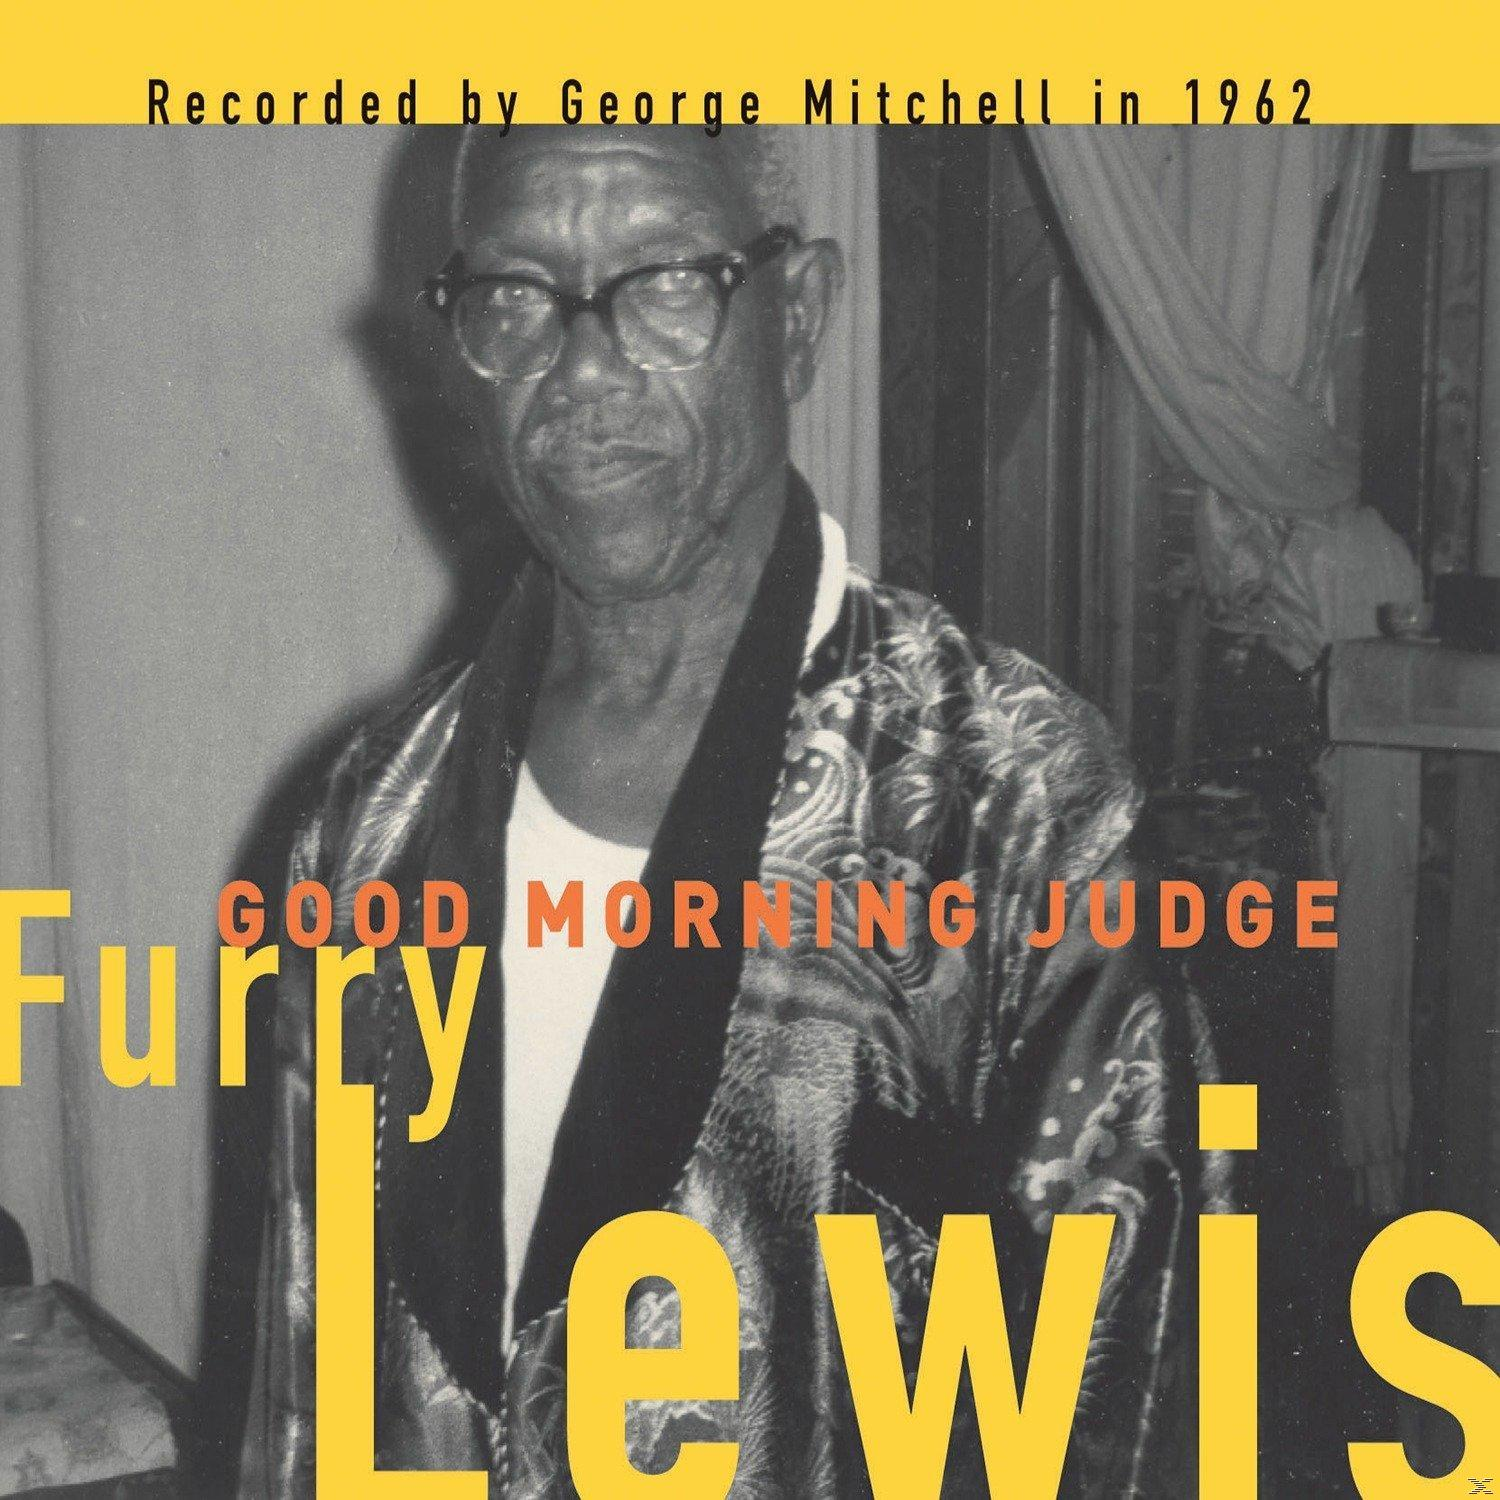 - (Vinyl) Furry Morning Judge Good - Lewis